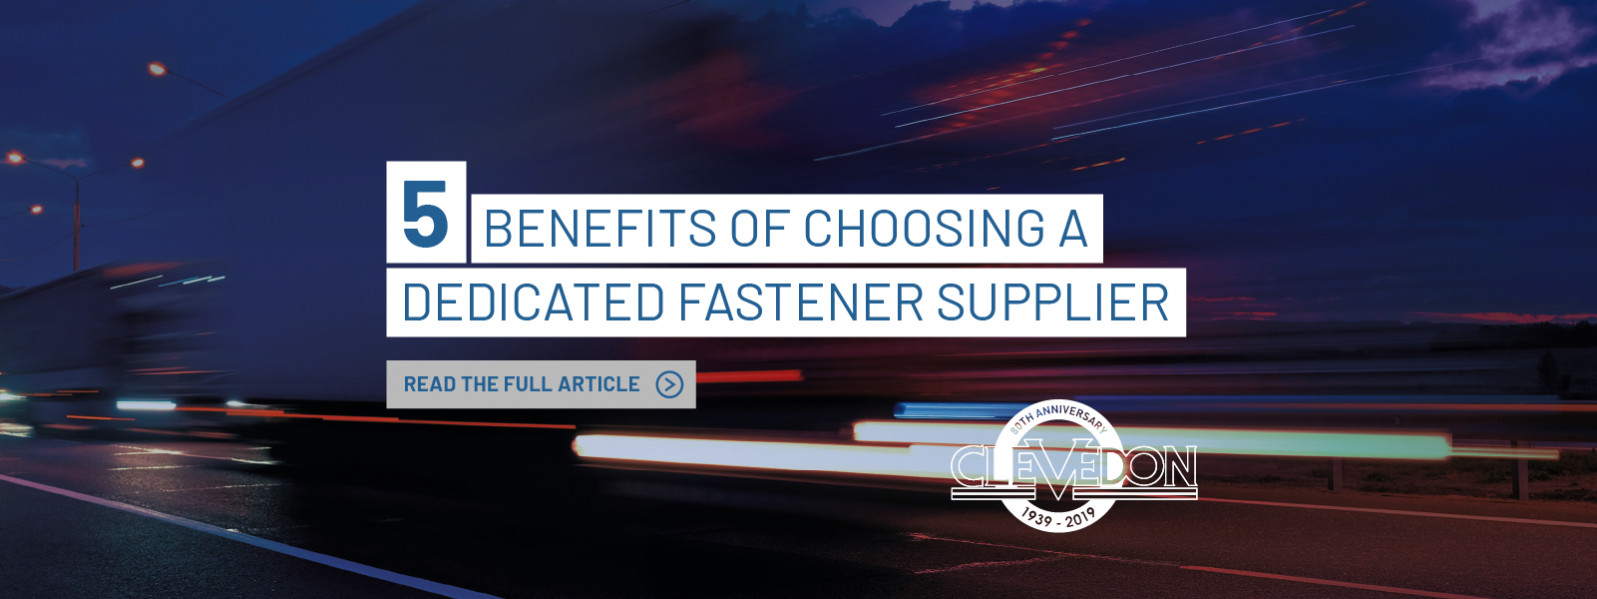 5 Benefits of Choosing a Dedicated Fastener Suppli...